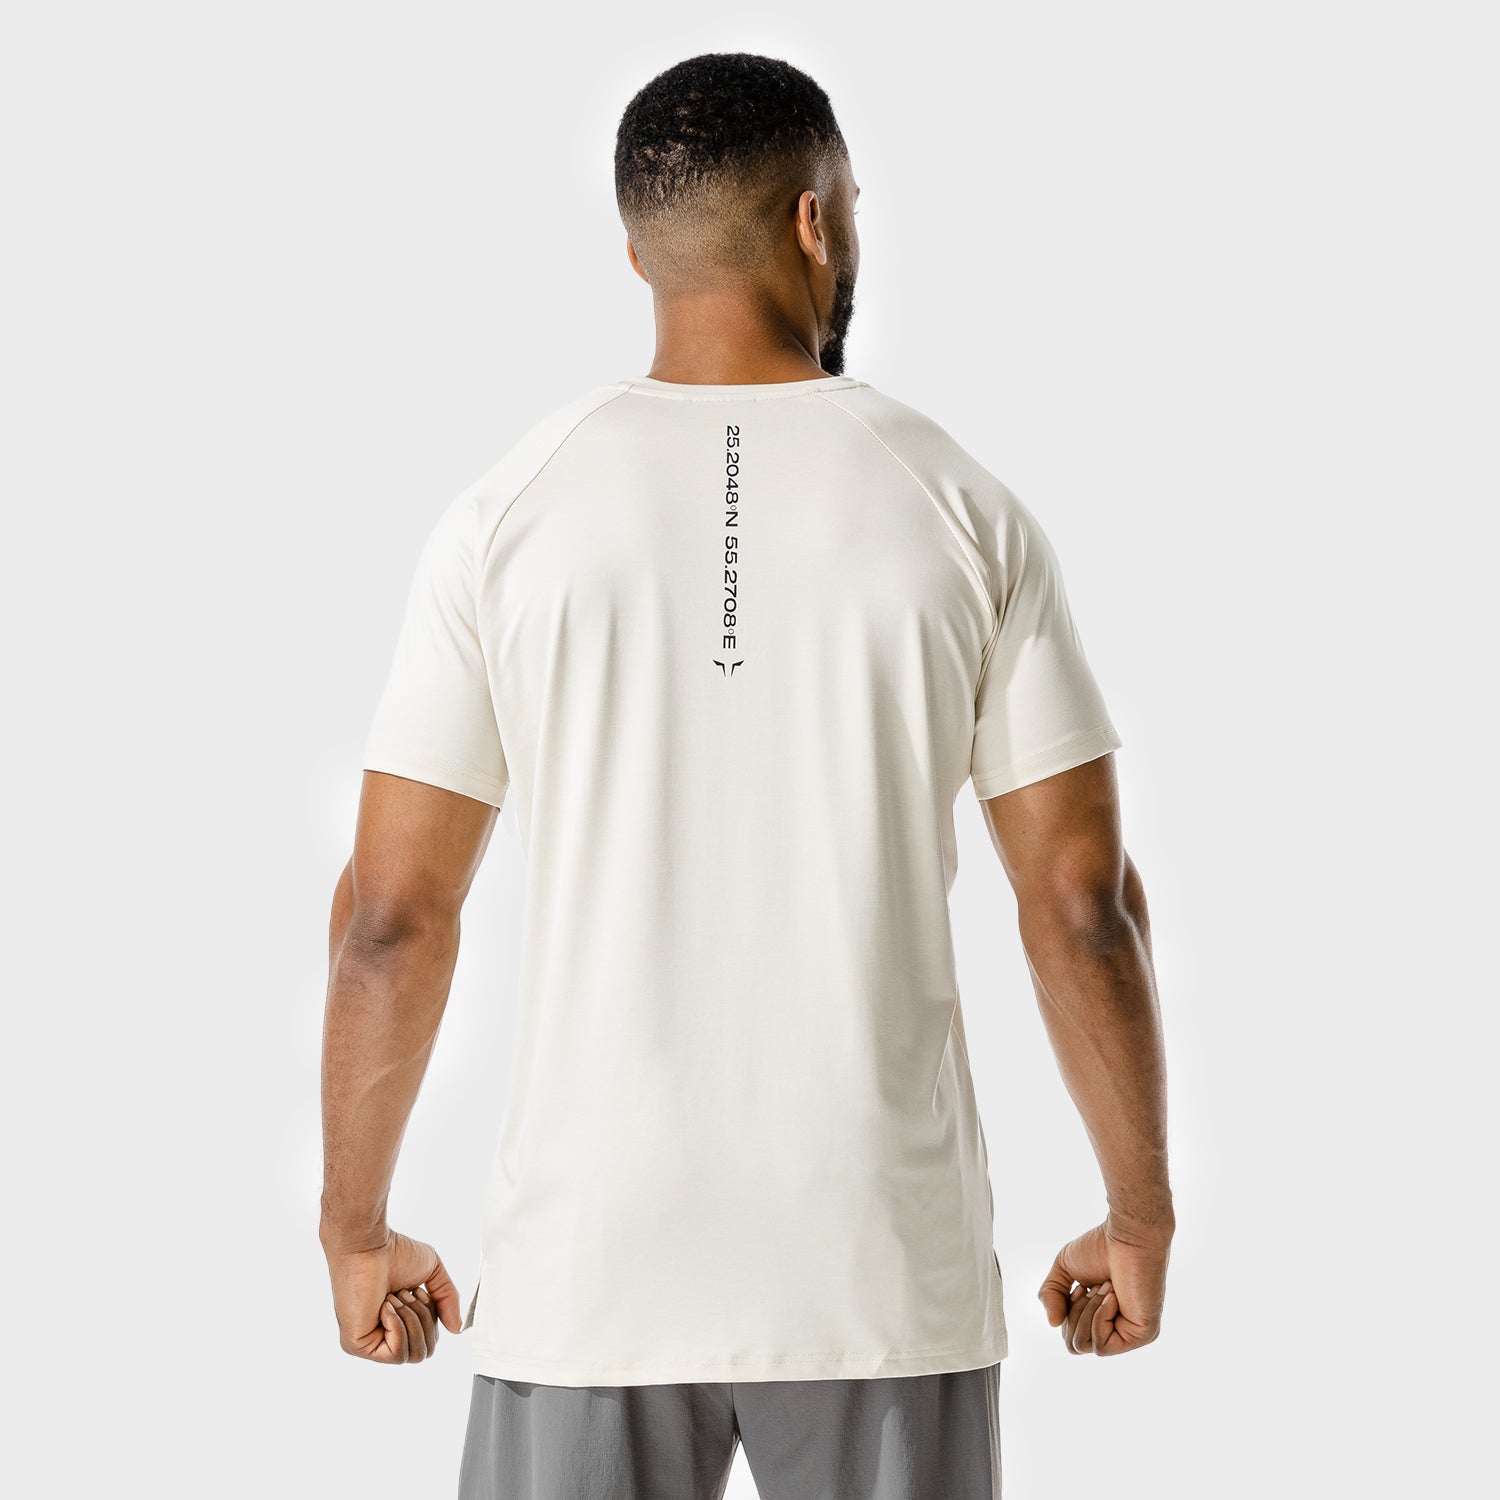 squatwolf-gym-t-shirt-code-logo-t-shirt-ecru-marl-workout-clothes-for-men